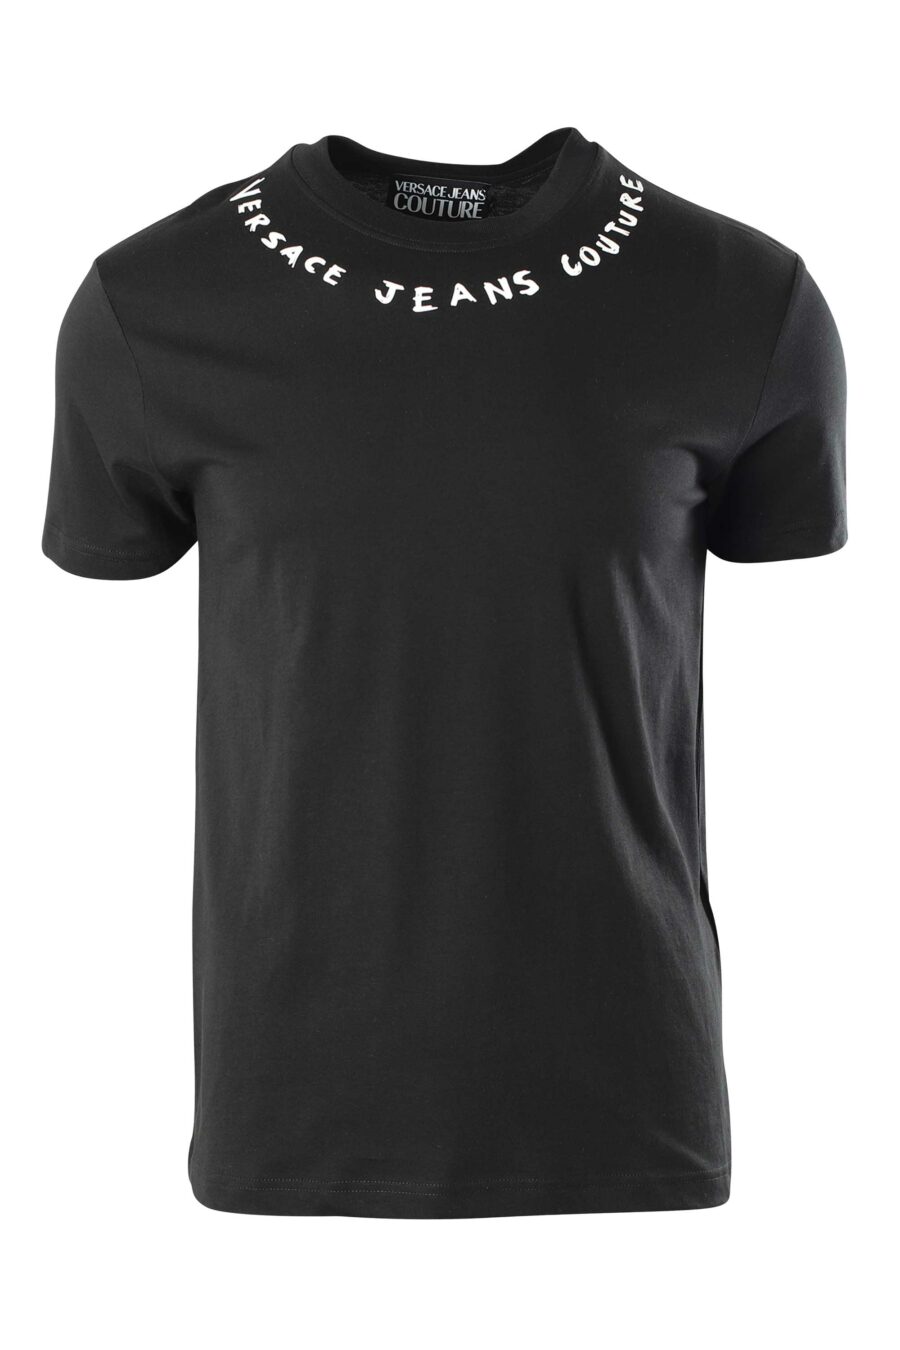 Black T-shirt with logo on collar - 8052019325577